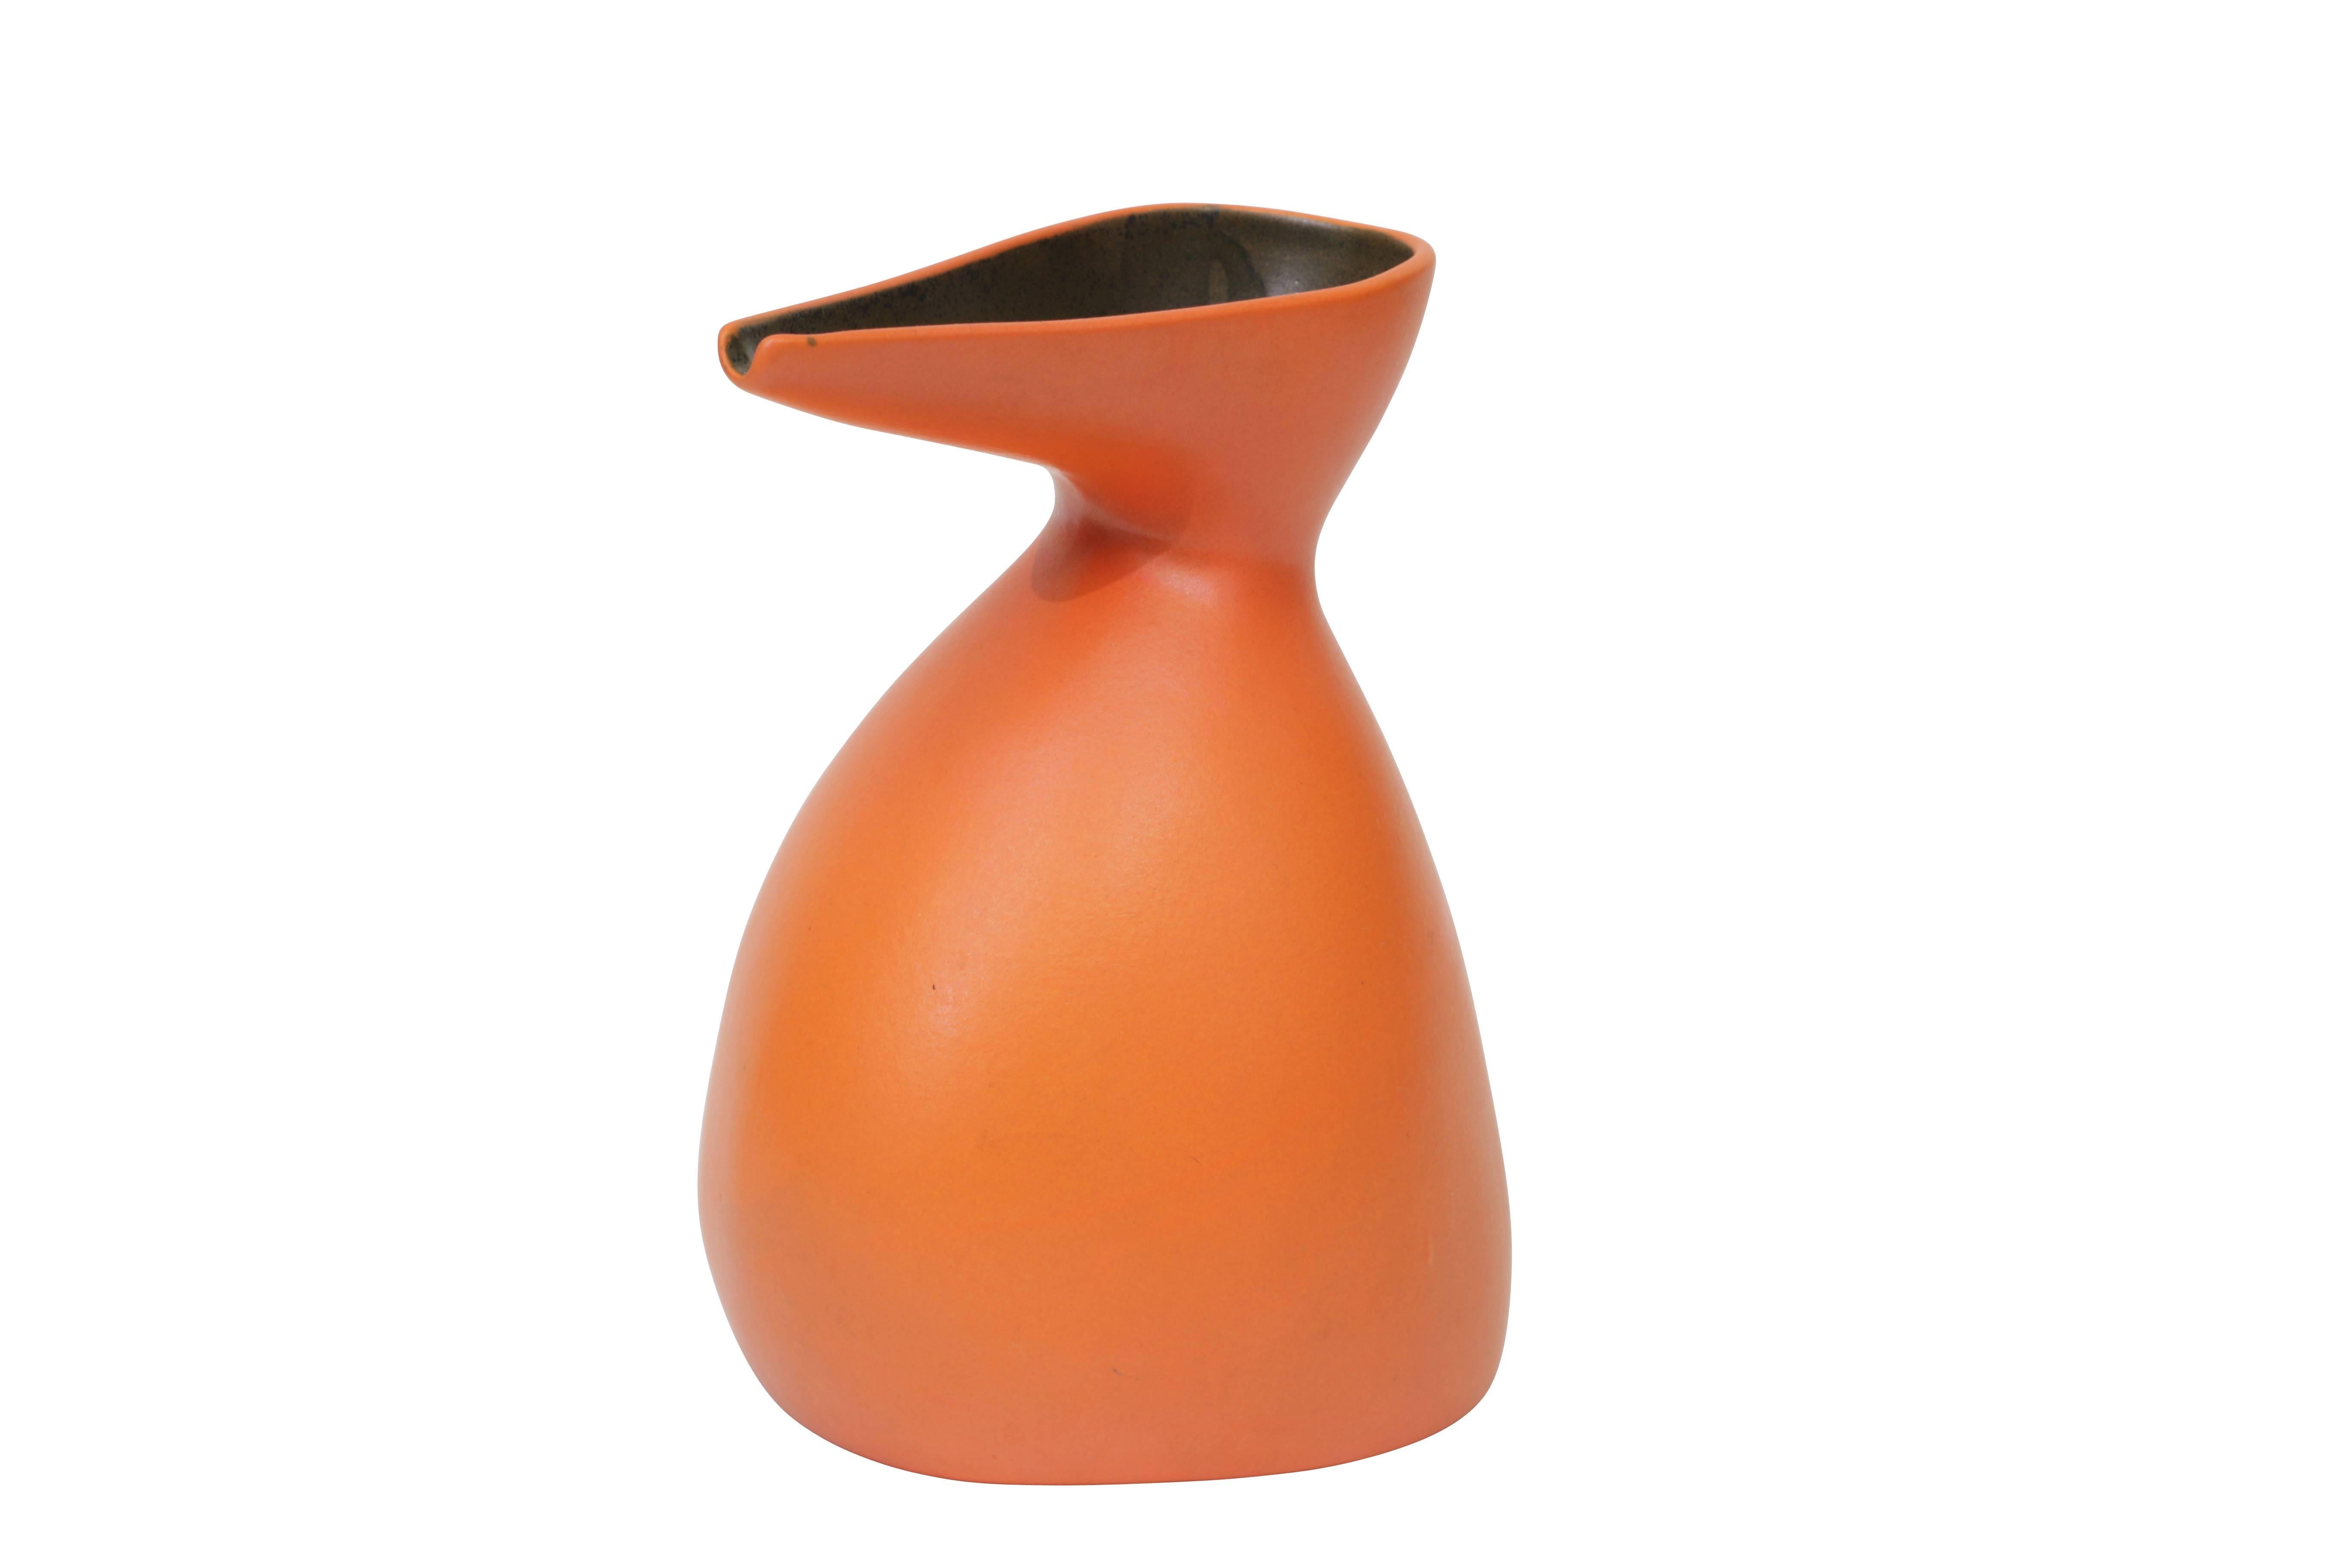 Beautiful ceramic pitcher with rich orange exterior and black interior.